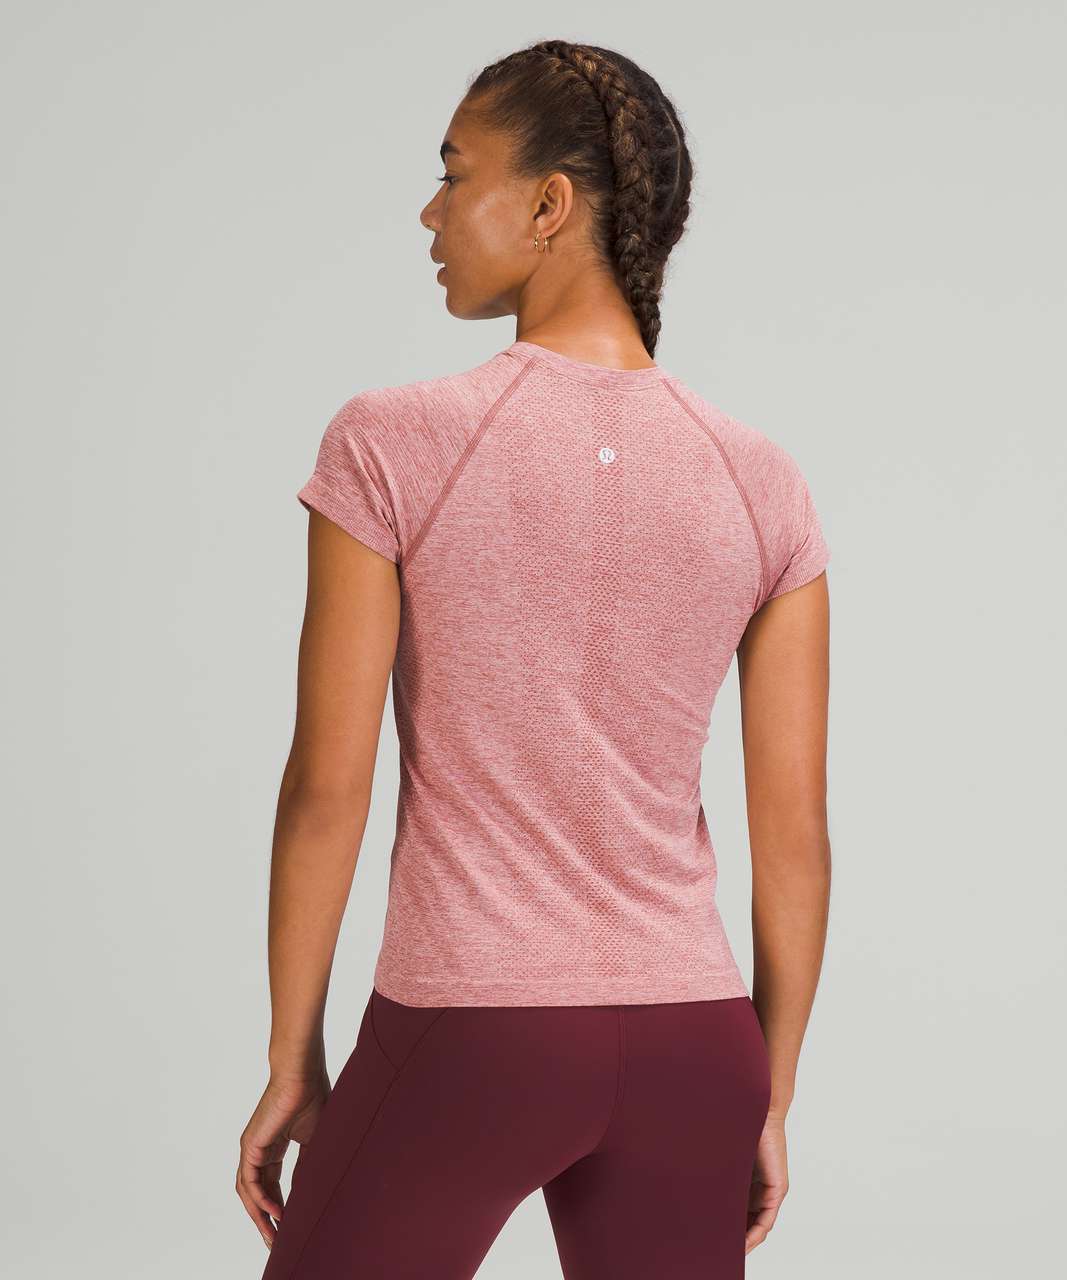 Lululemon Swiftly Tech Short Sleeve Shirt 2.0 *Race Length - Spiced Chai / Pink Rosebud